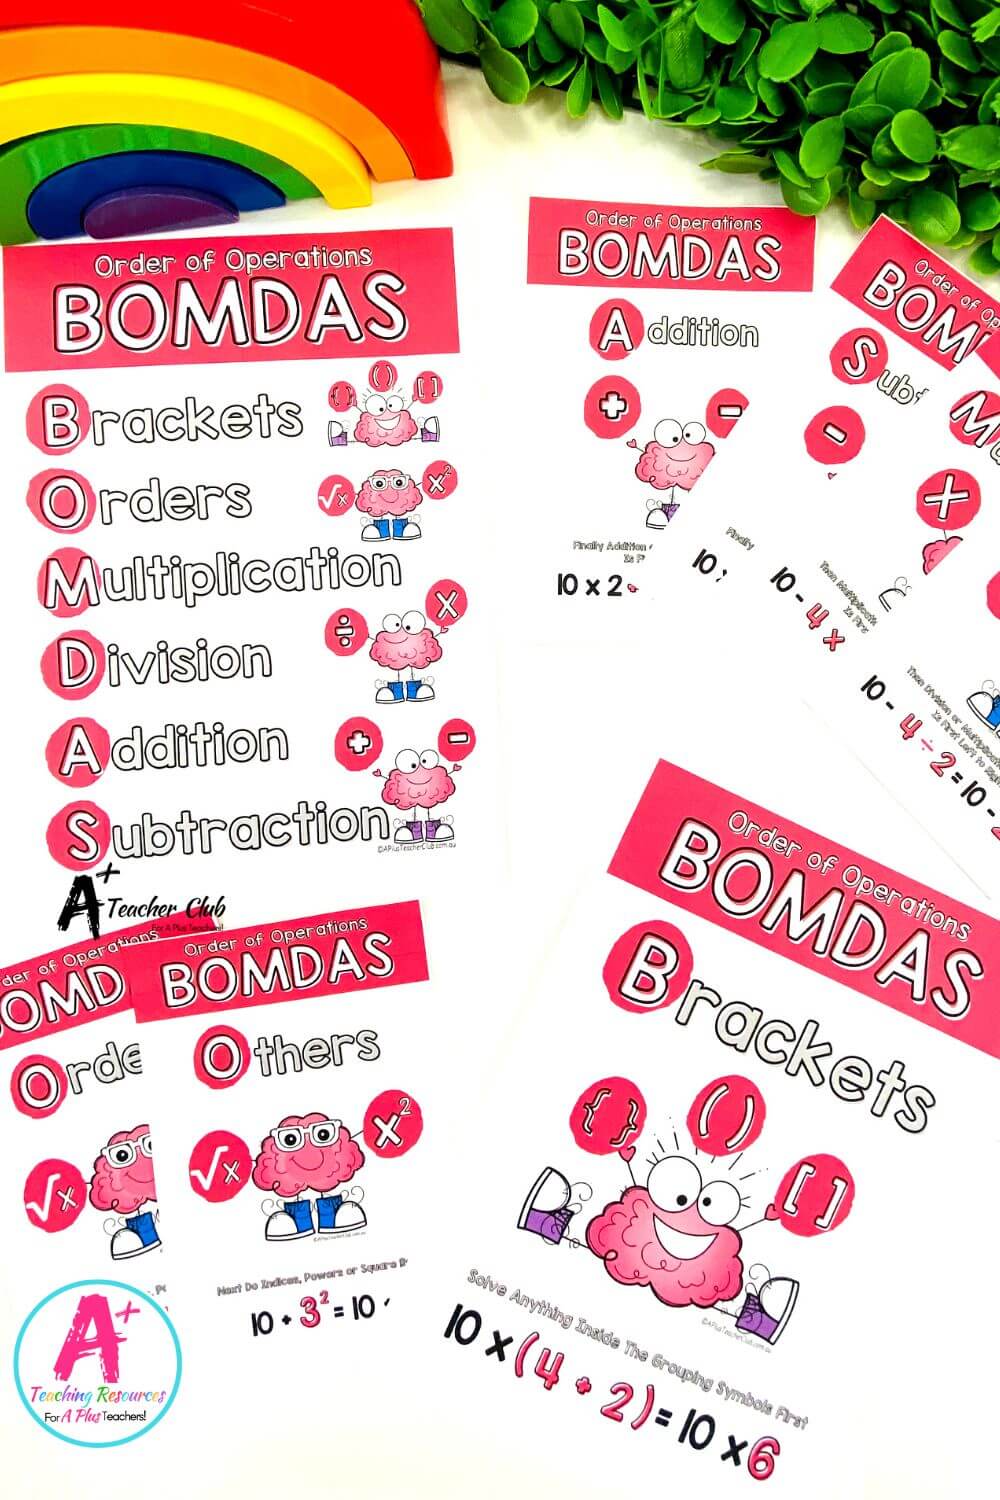 BOMDAS Posters